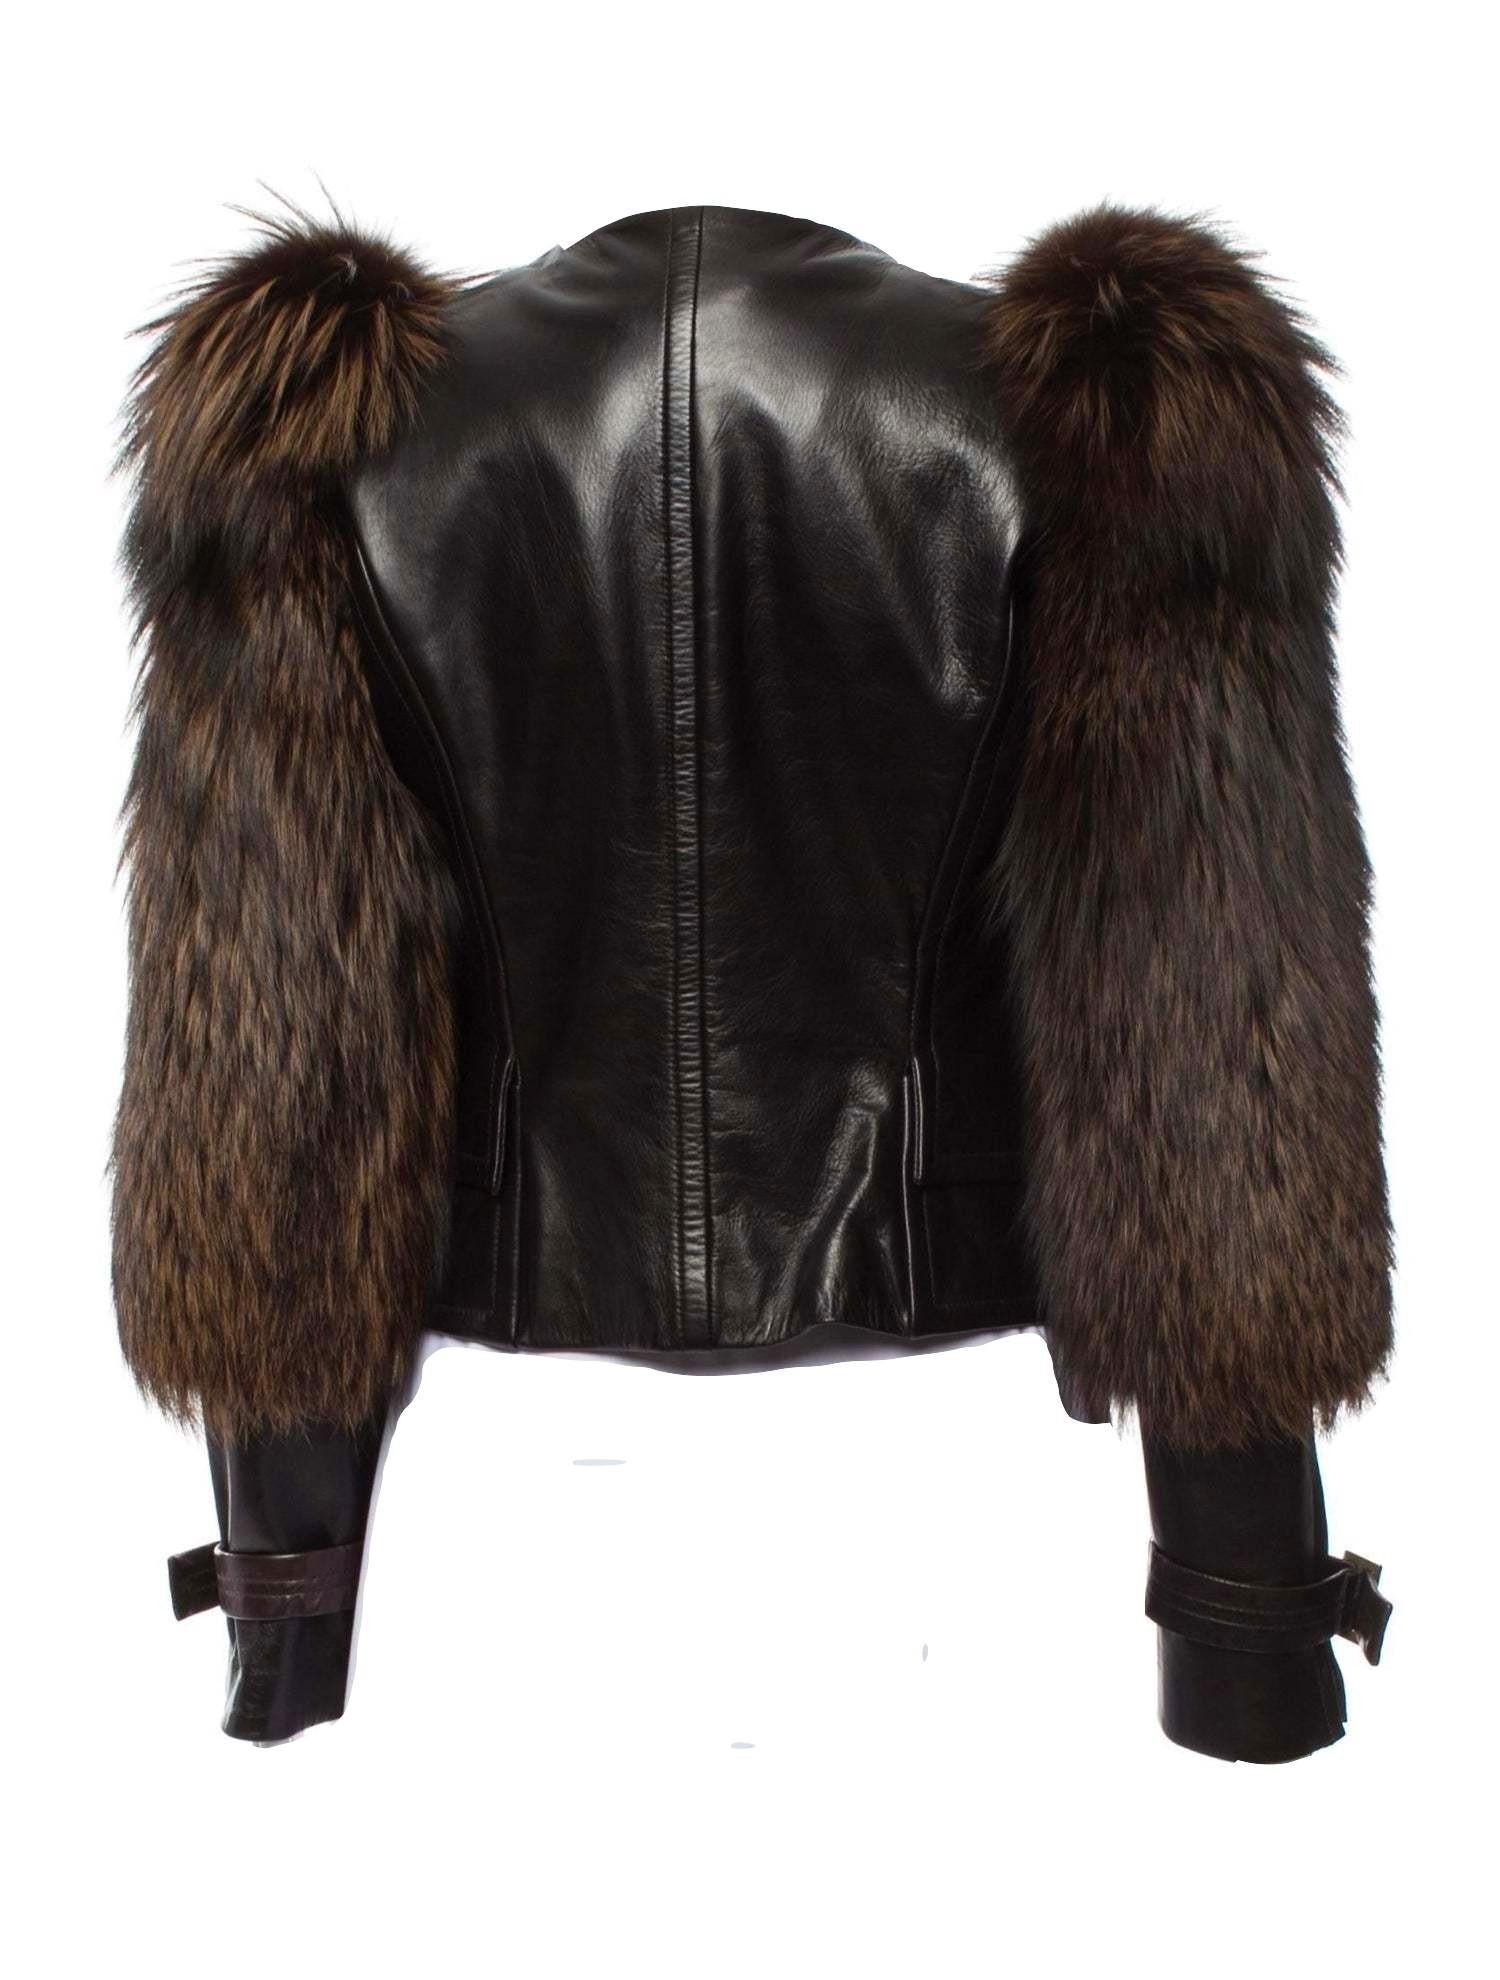 New Rare Tom Ford for Gucci F/W 2003 Fox Fur Gaga Runway Jacket Coat  $9, 650 3